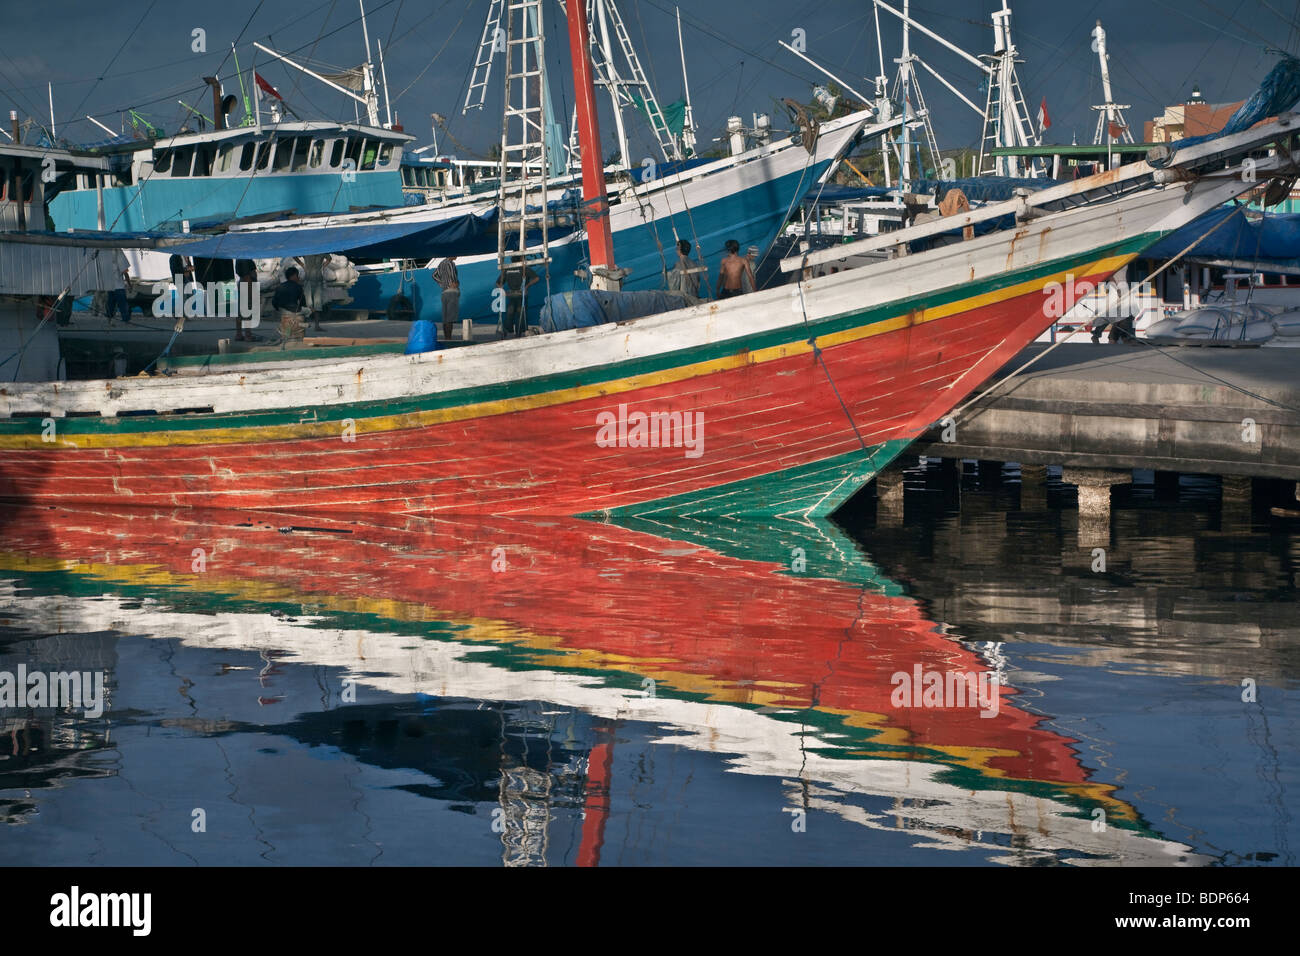 Indonesia Sulawesi, Makassar, (formerly Ujung Pandang) Pelabuhan Paotere porto dove il Bugis le navi a vela ormeggio, tardo pomeriggio Foto Stock